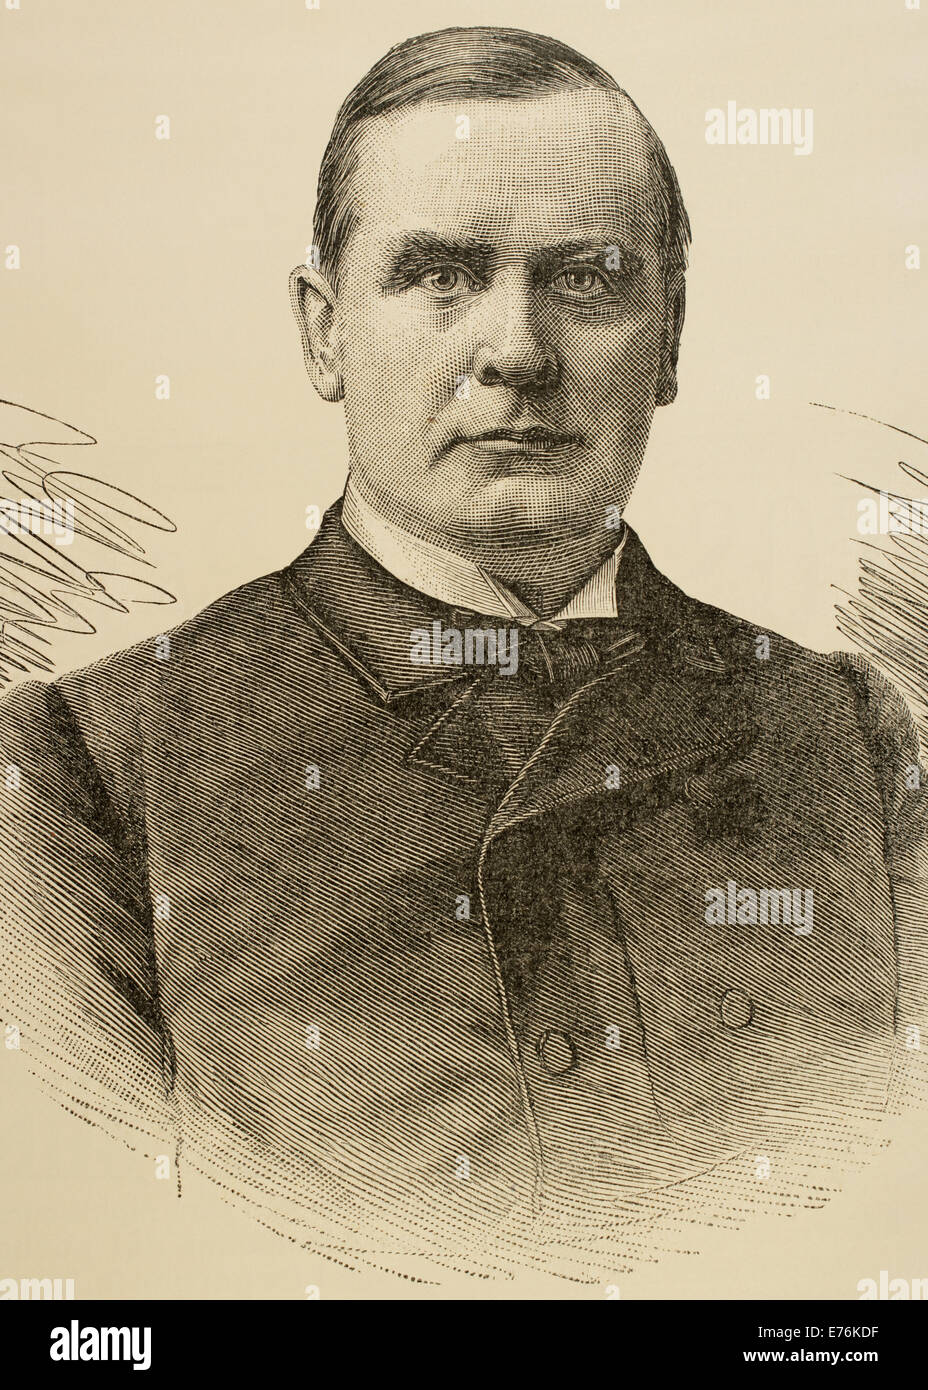 William McKinley (1843-1901).  25th President of the United States. Engraving. La Ilustracion Espanola y Americana, 1890. Stock Photo